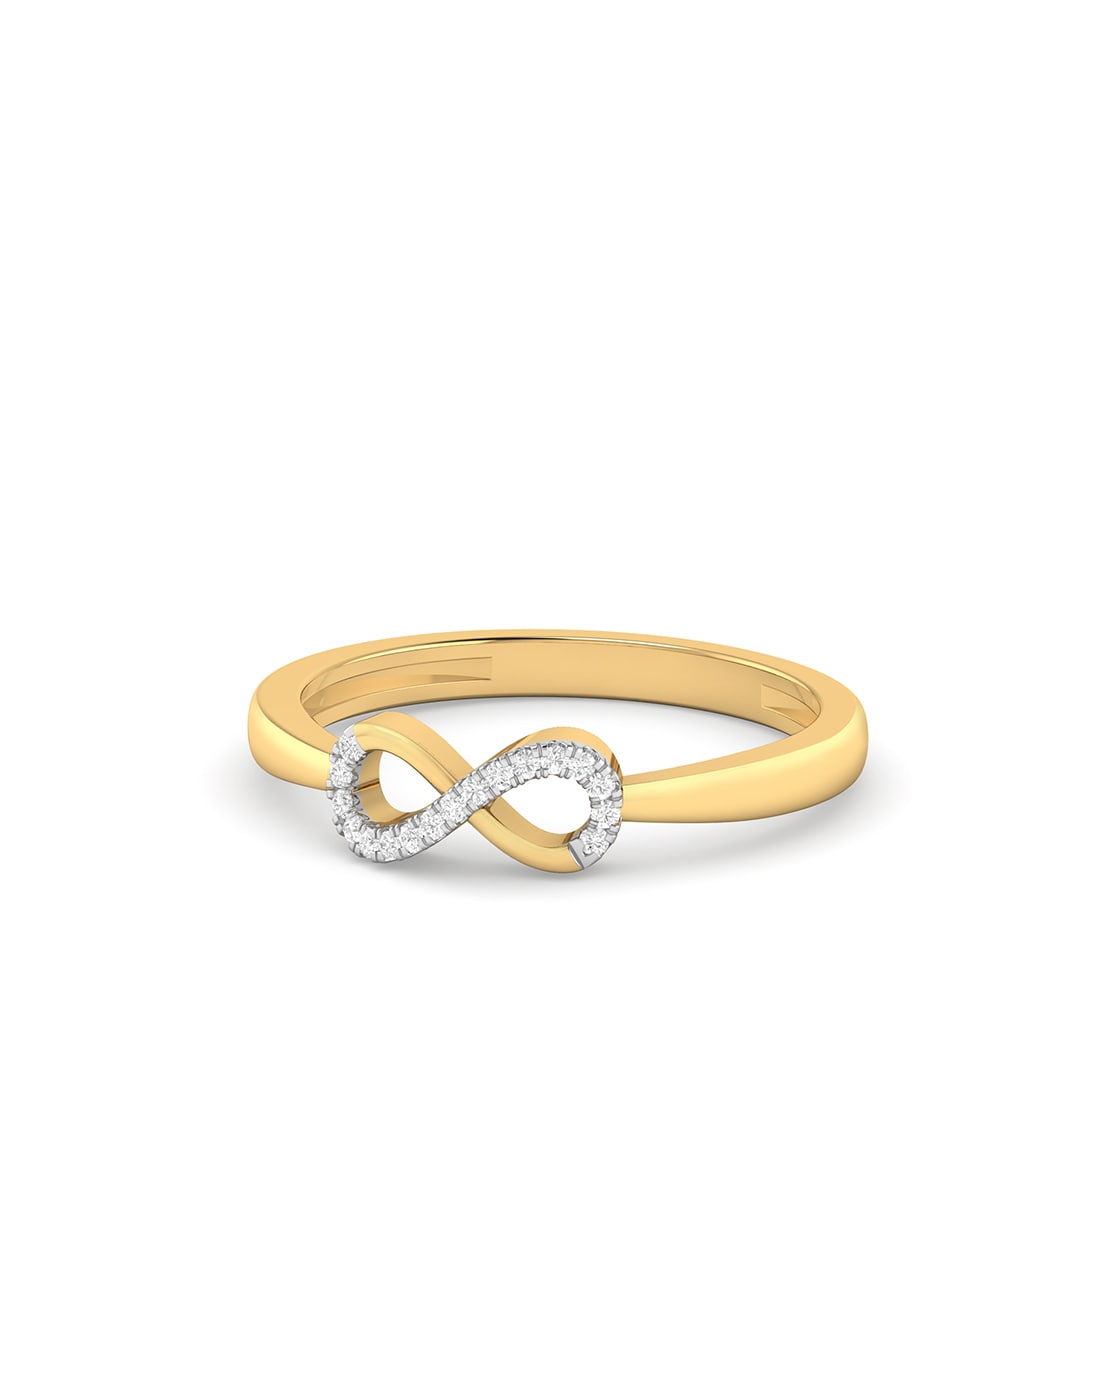 Goldsmiths 9ct White Gold 0.12cttw Diamond Infinity Ring - Ring Size J  DA3850D69KW | Goldsmiths